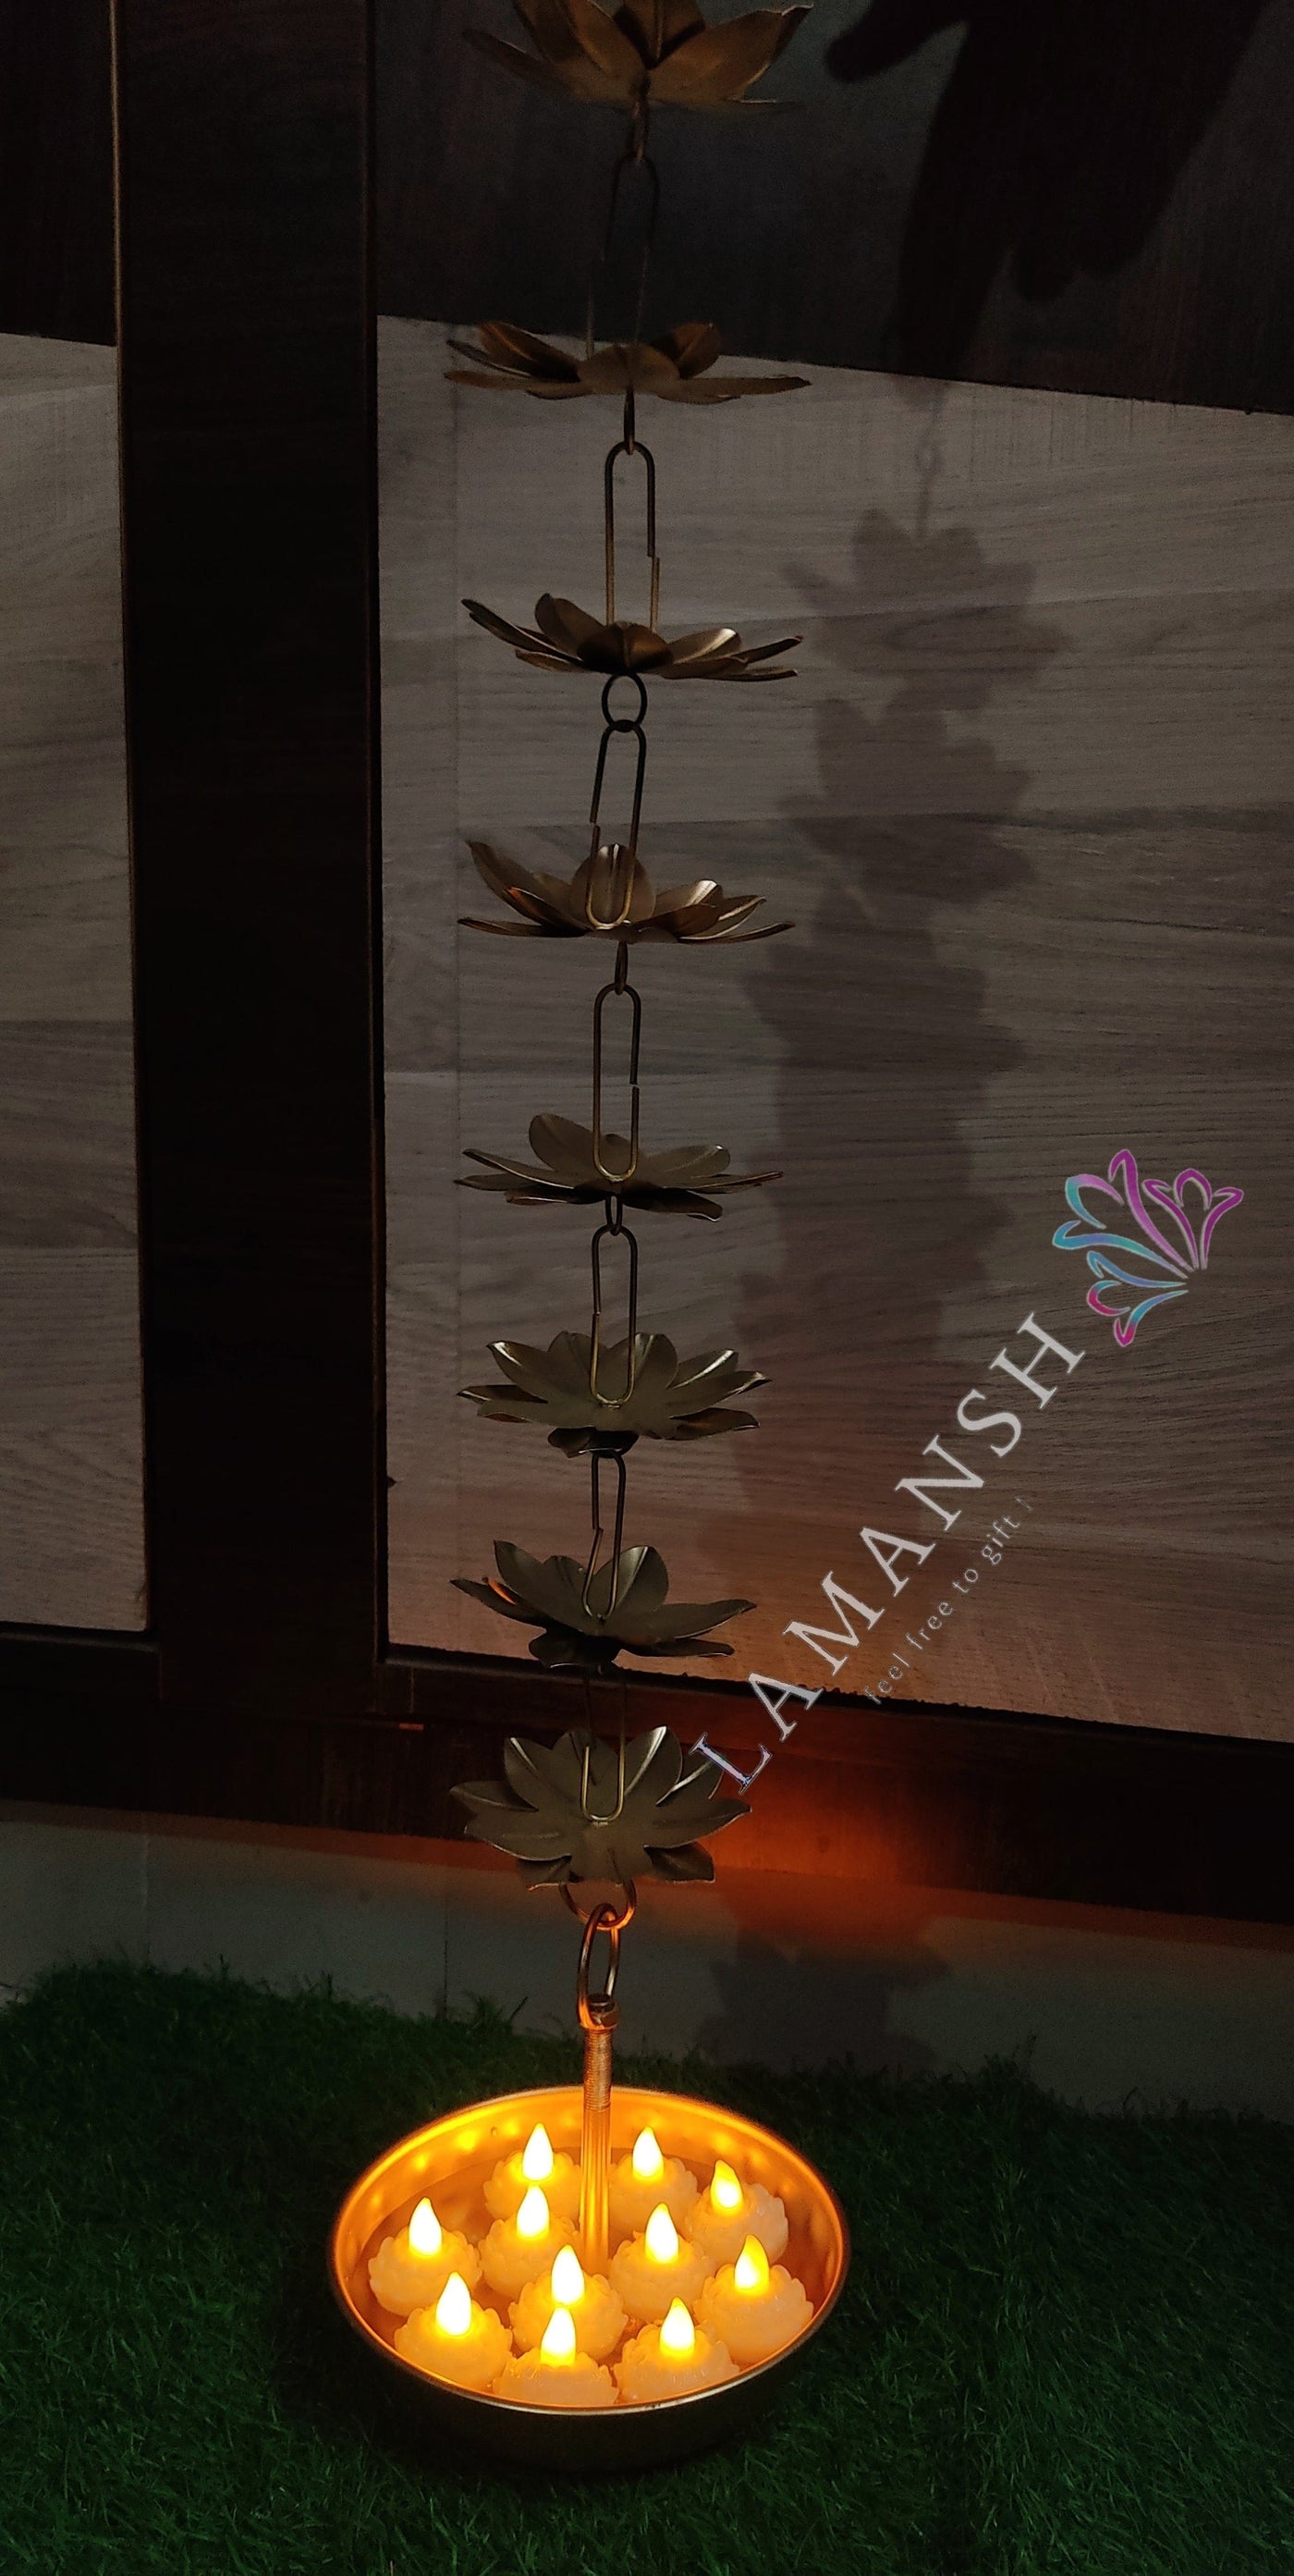 Lamansh urli LAMANSH® Metal Wall Lotus Hanging Urli for Ganpati / Diwali Festival decoration / Metal Designer urli for pooja mandir home decoration